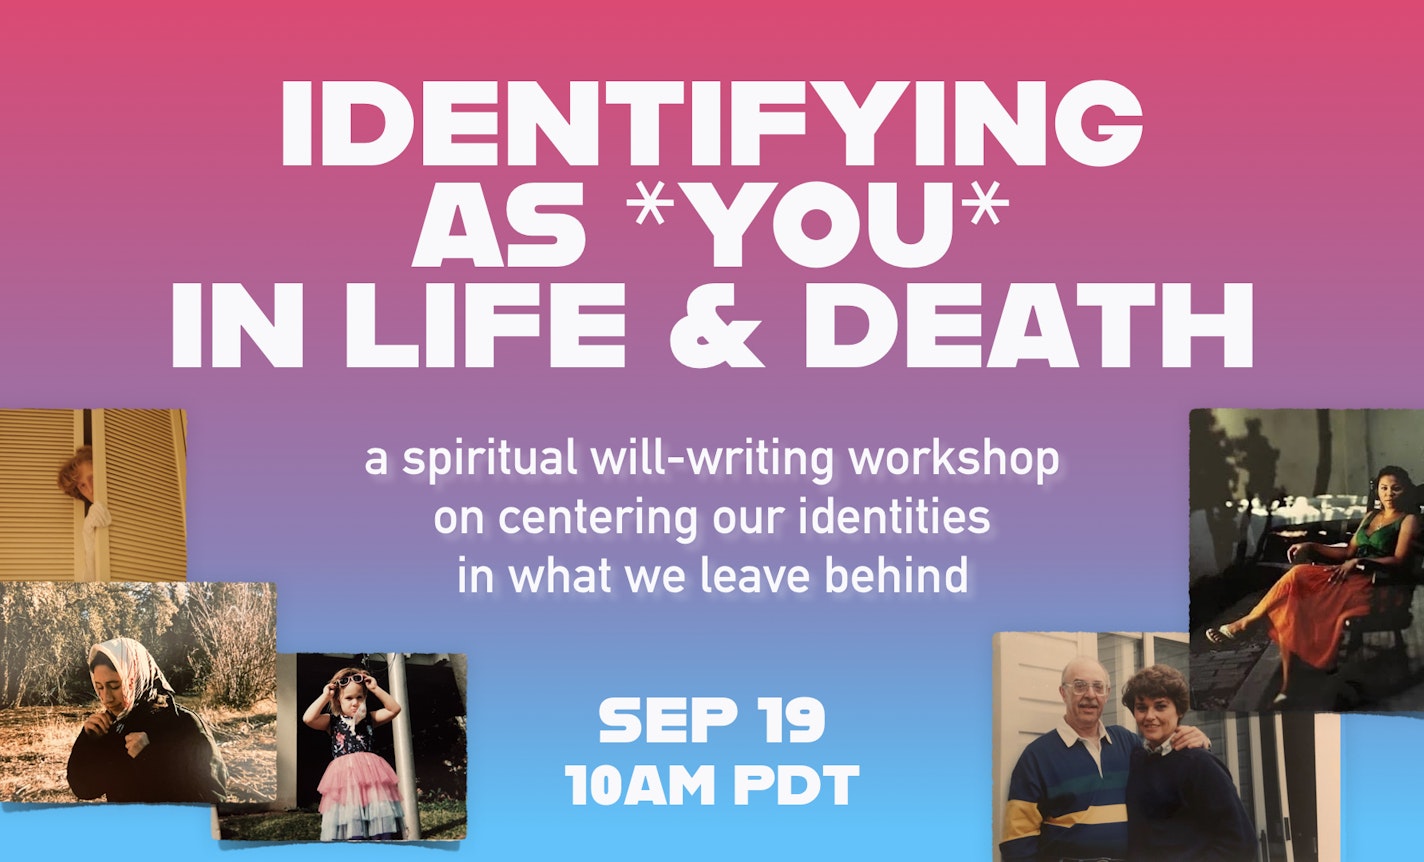 Spiritual Will-Writing: Identifying as You in Life & Death